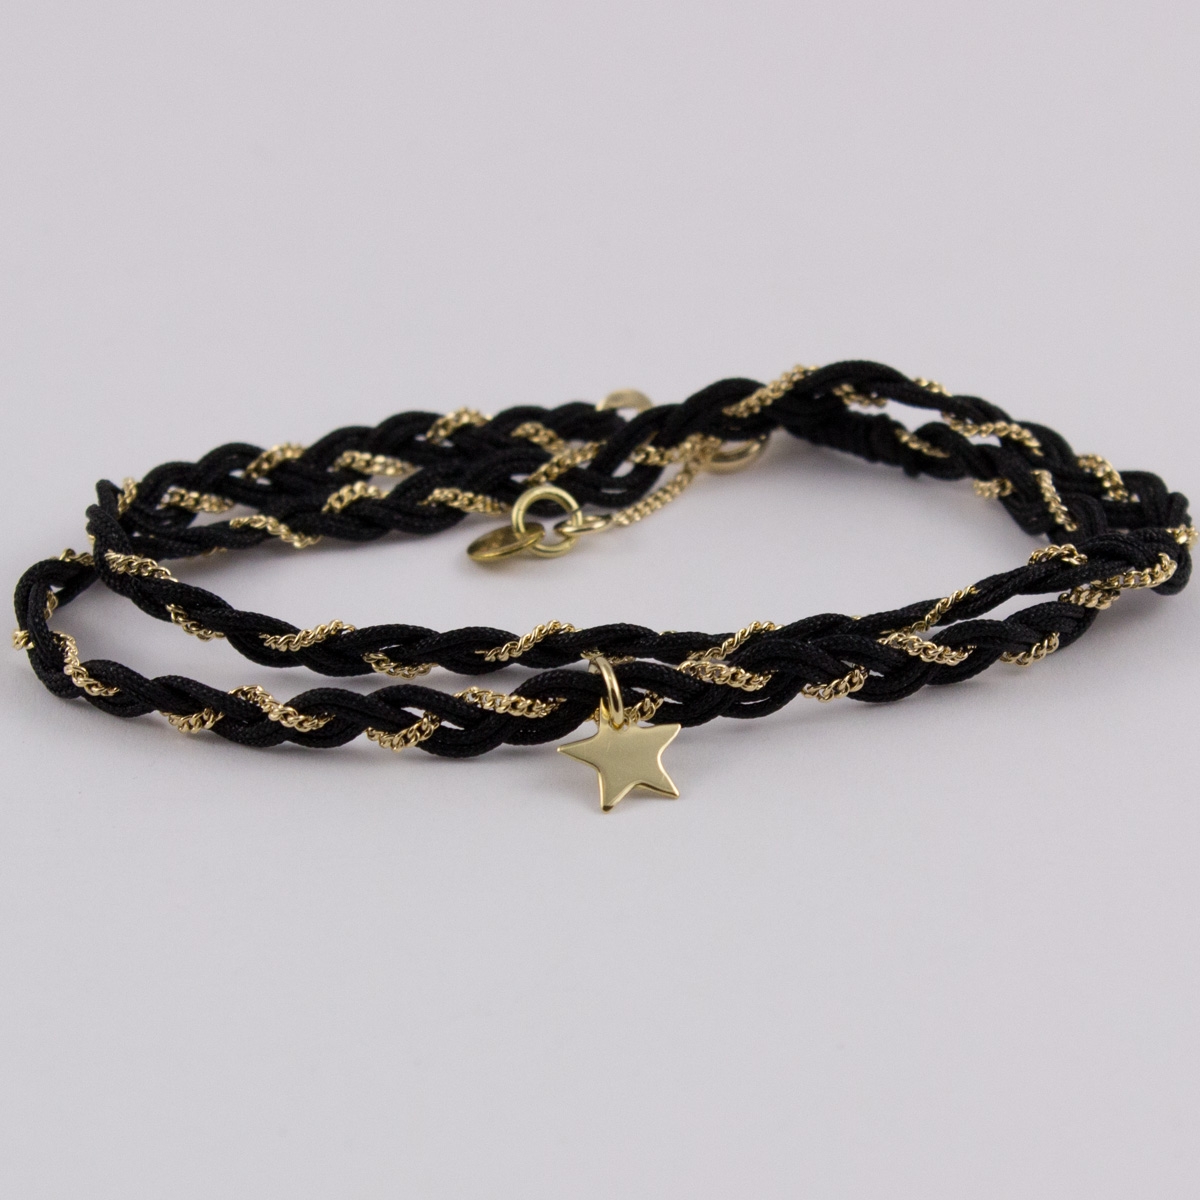 Bracelet marocain en fil d'or – Tressé